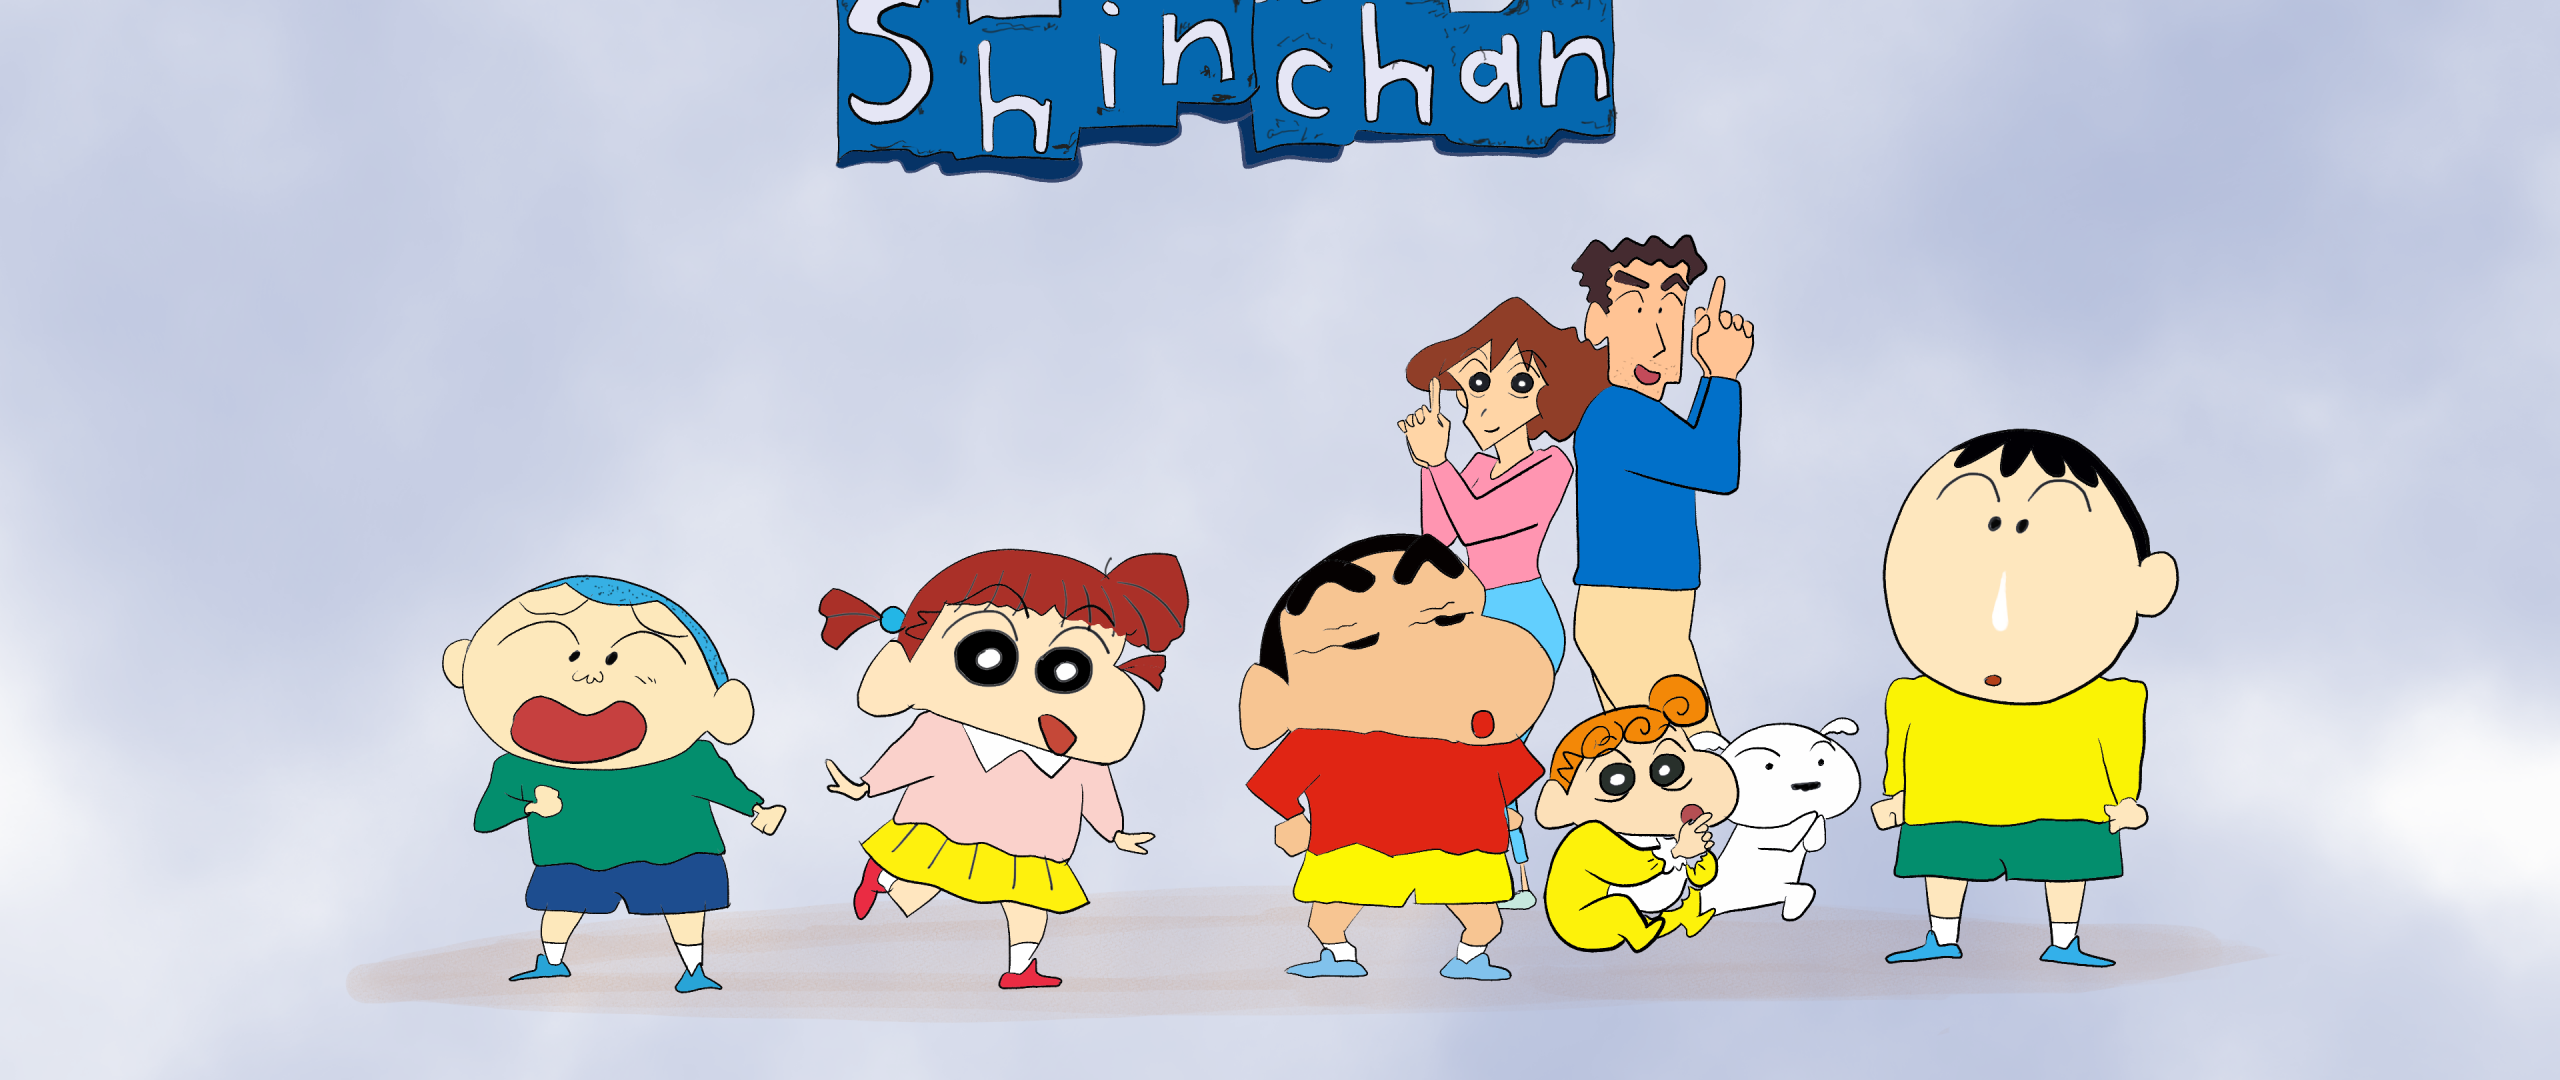 Shinchan Family Wallpaper Download | MobCup